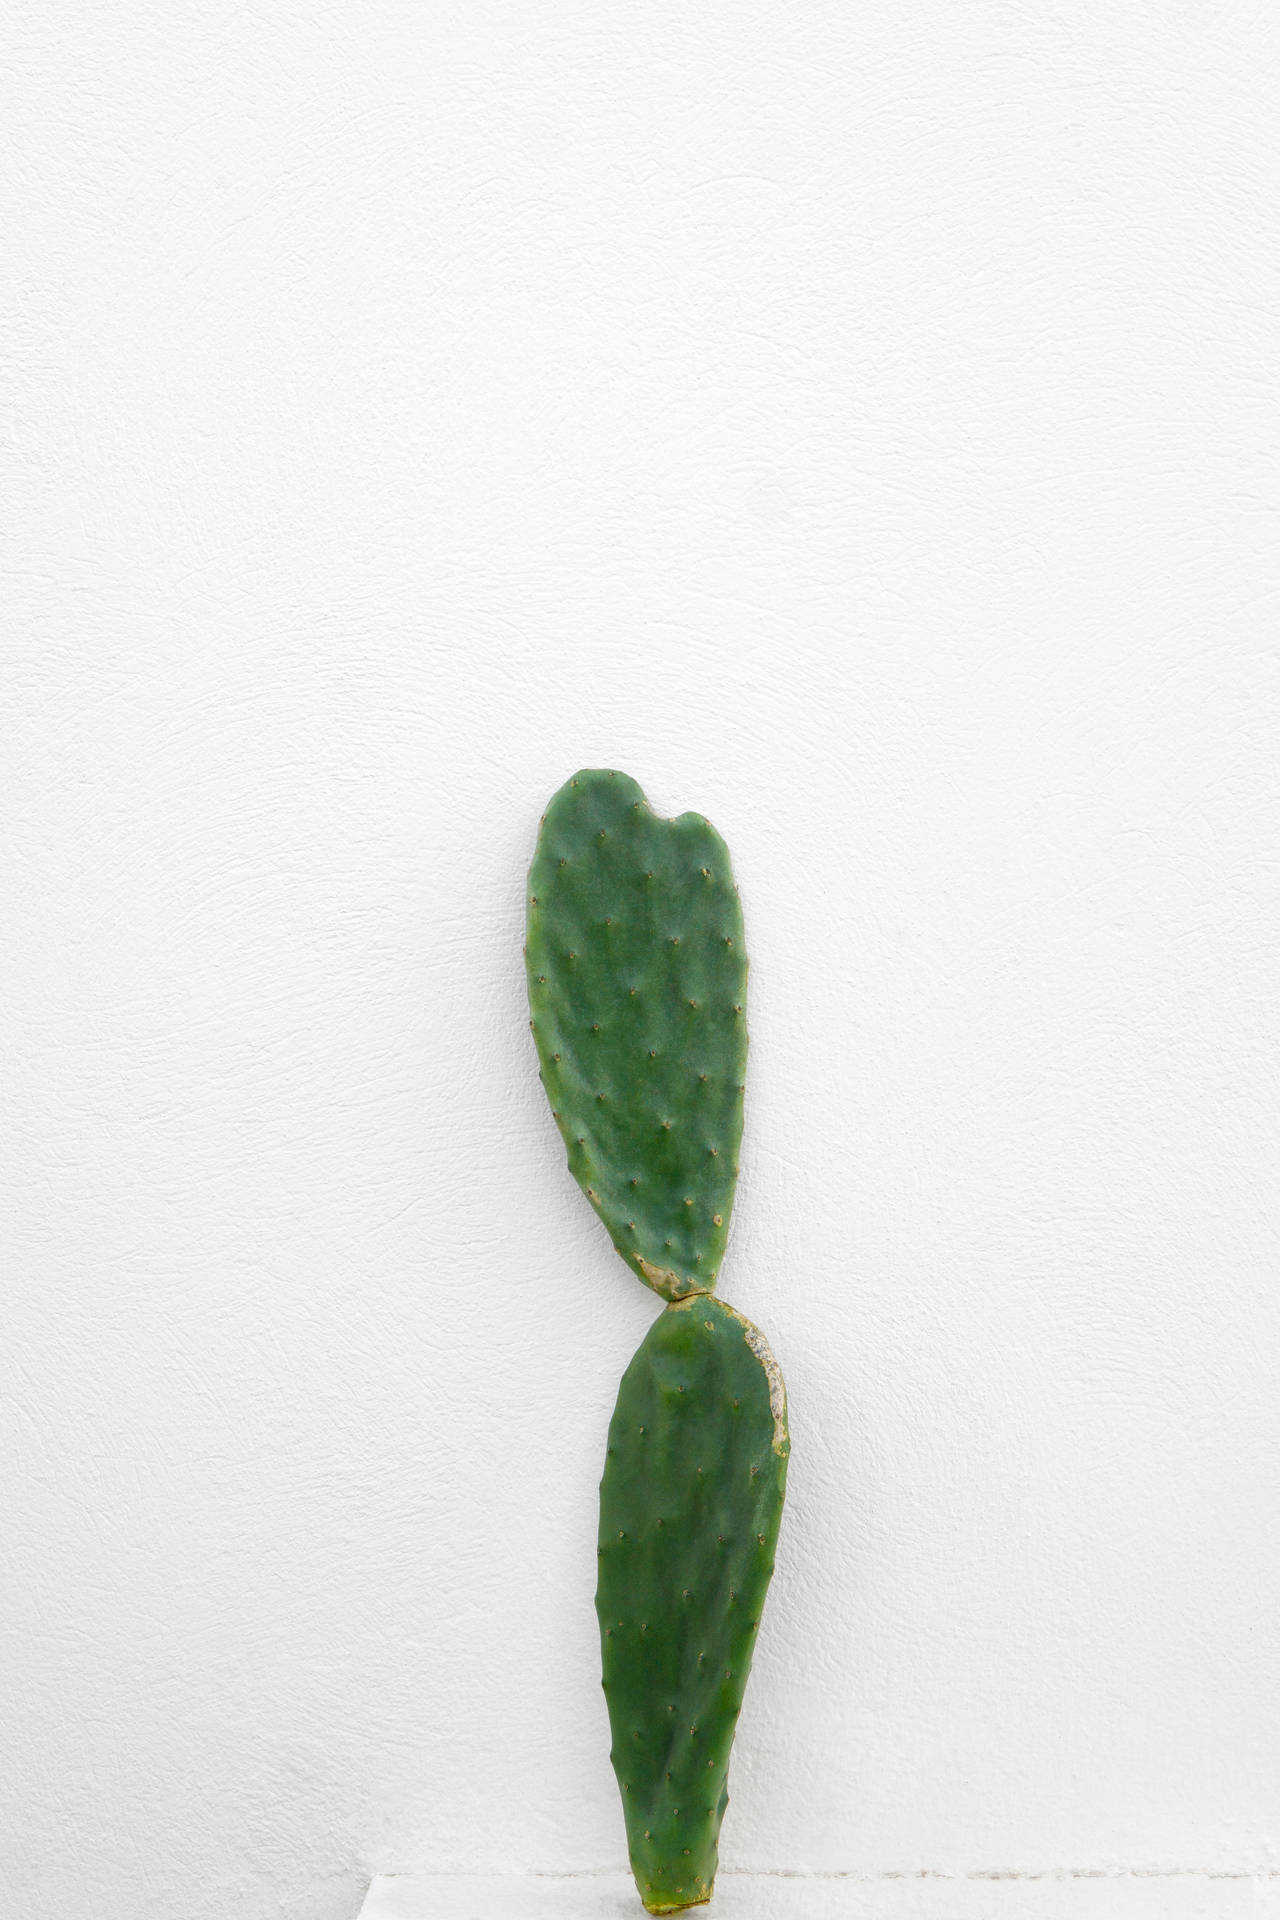 Sharp Thorns Of Cacti Wallpaper